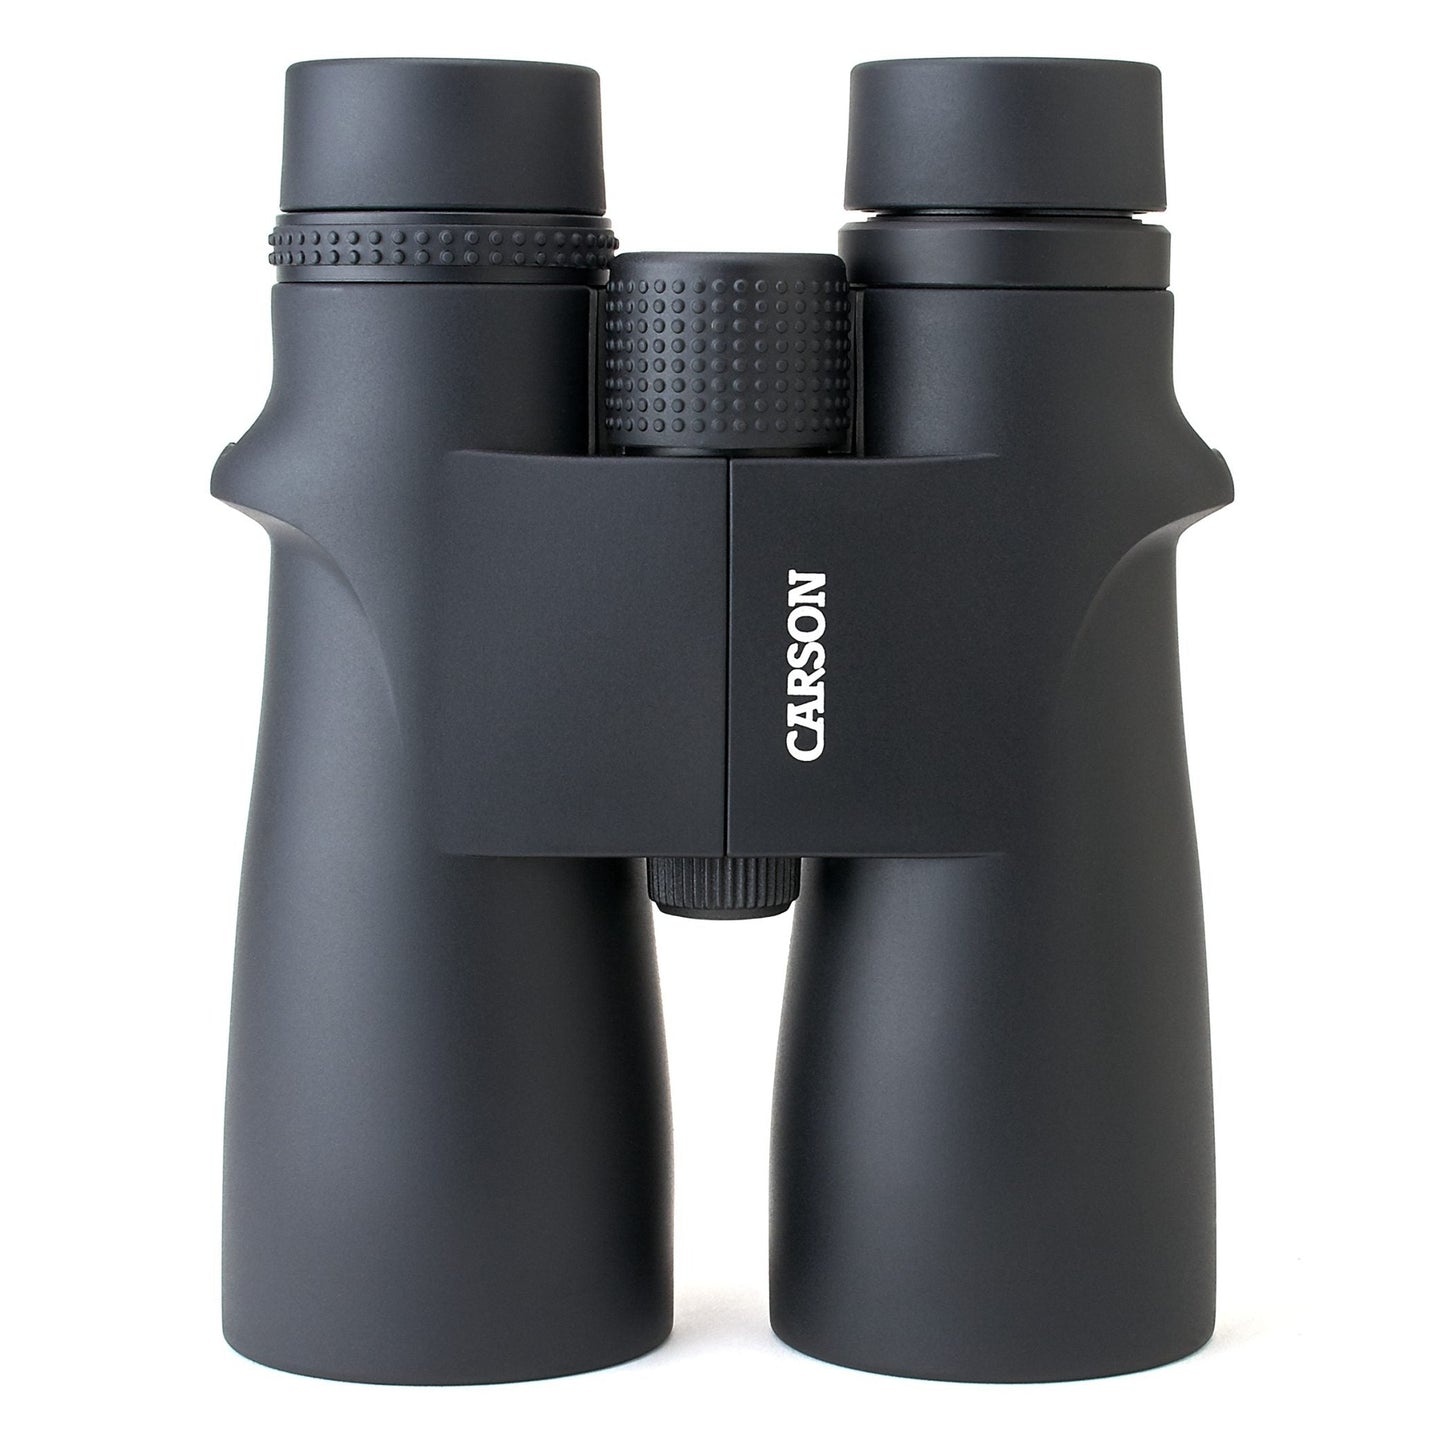 Carson VP Series 12x50mm Full-Sized Phase-Coated Waterproof Binoculars VP-250